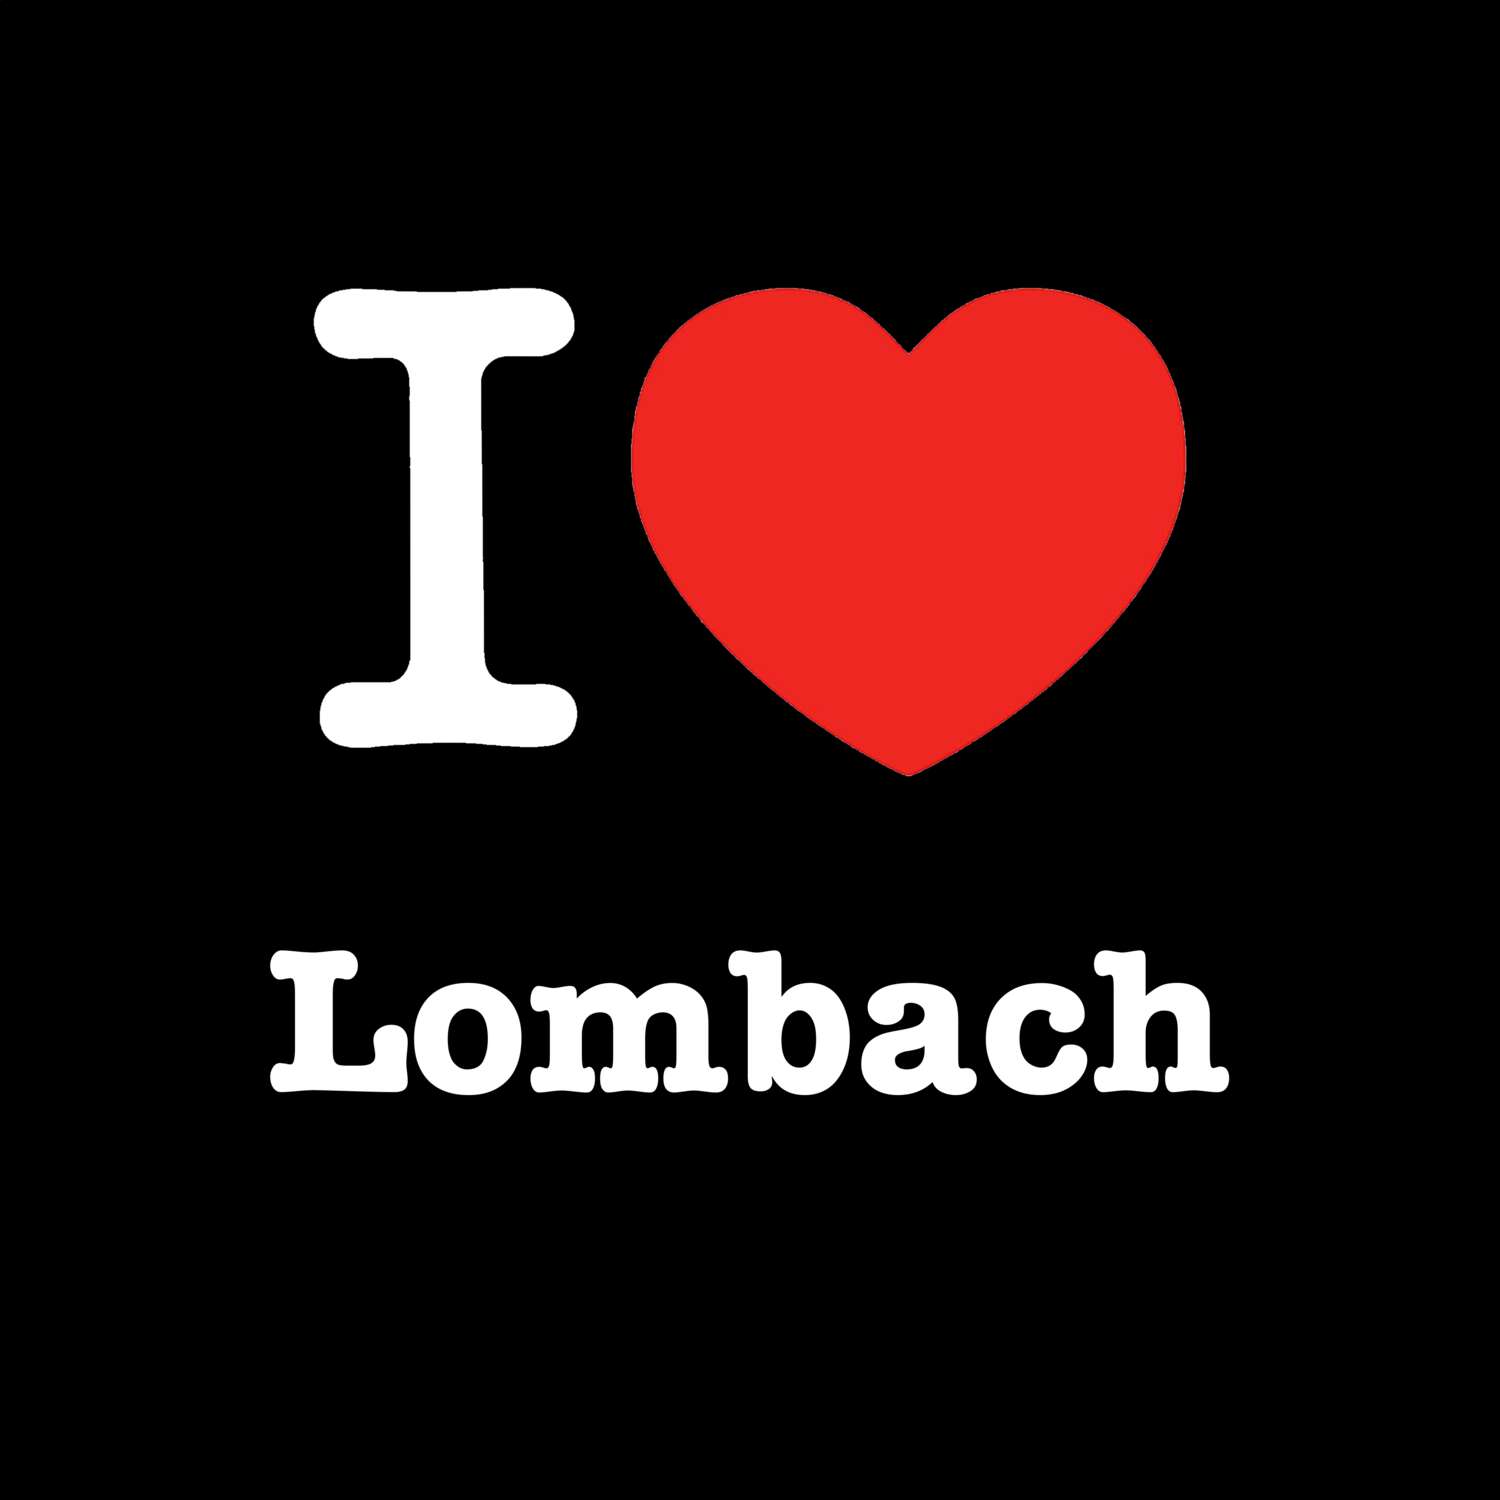 Lombach T-Shirt »I love«